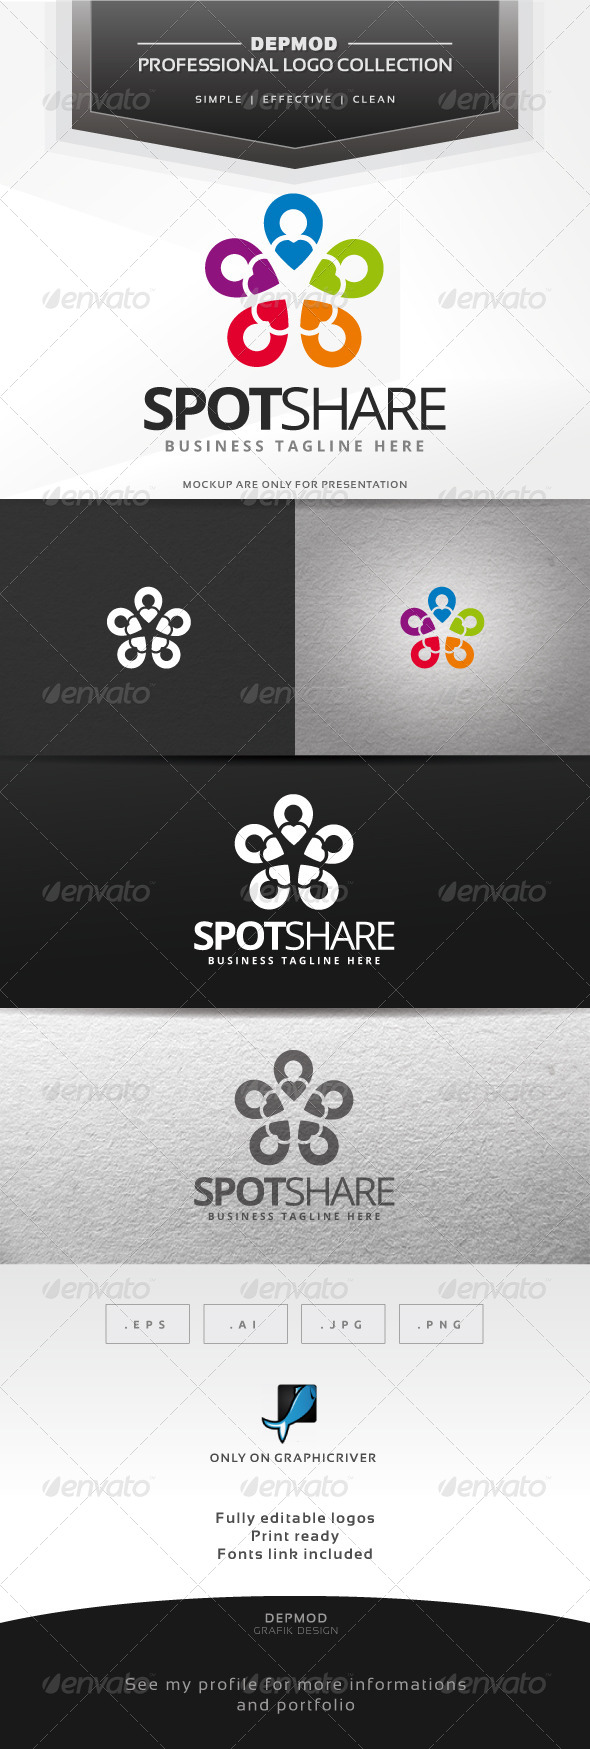 Spot Share Logo